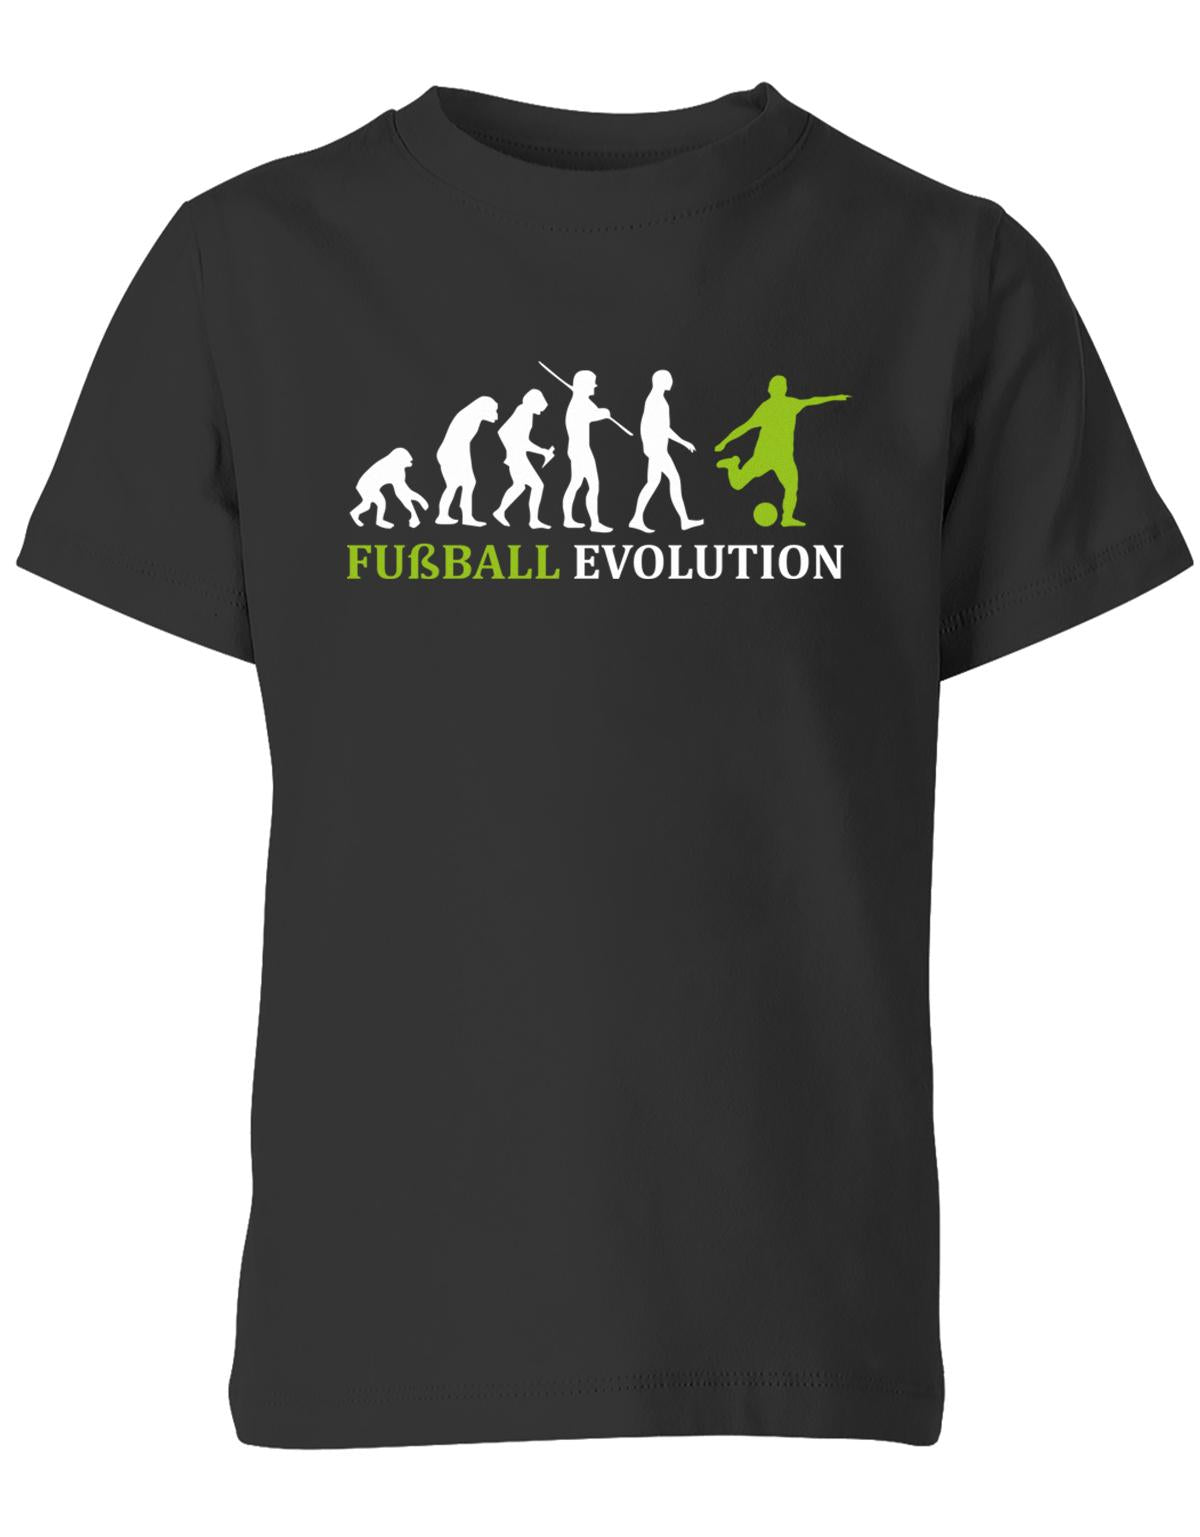 Fussball-Evolution-Kinder-Shirt-Schwarz-Gr-n